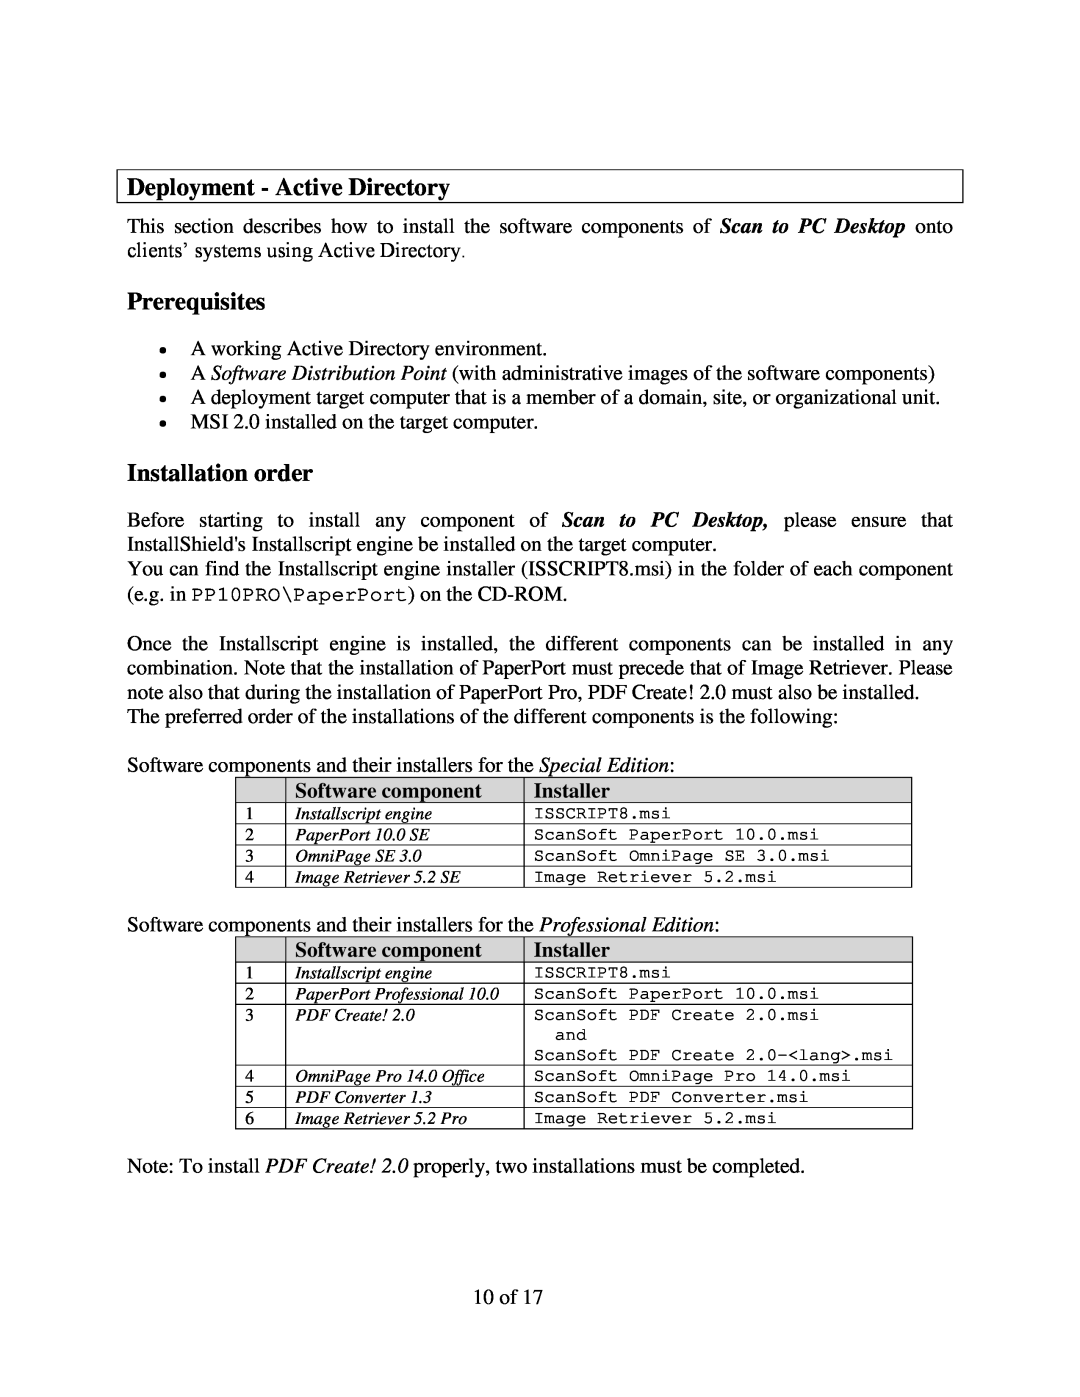 Xerox 098S04703 manual Deployment - Active Directory, Prerequisites, Installation order, Software component, Installer 